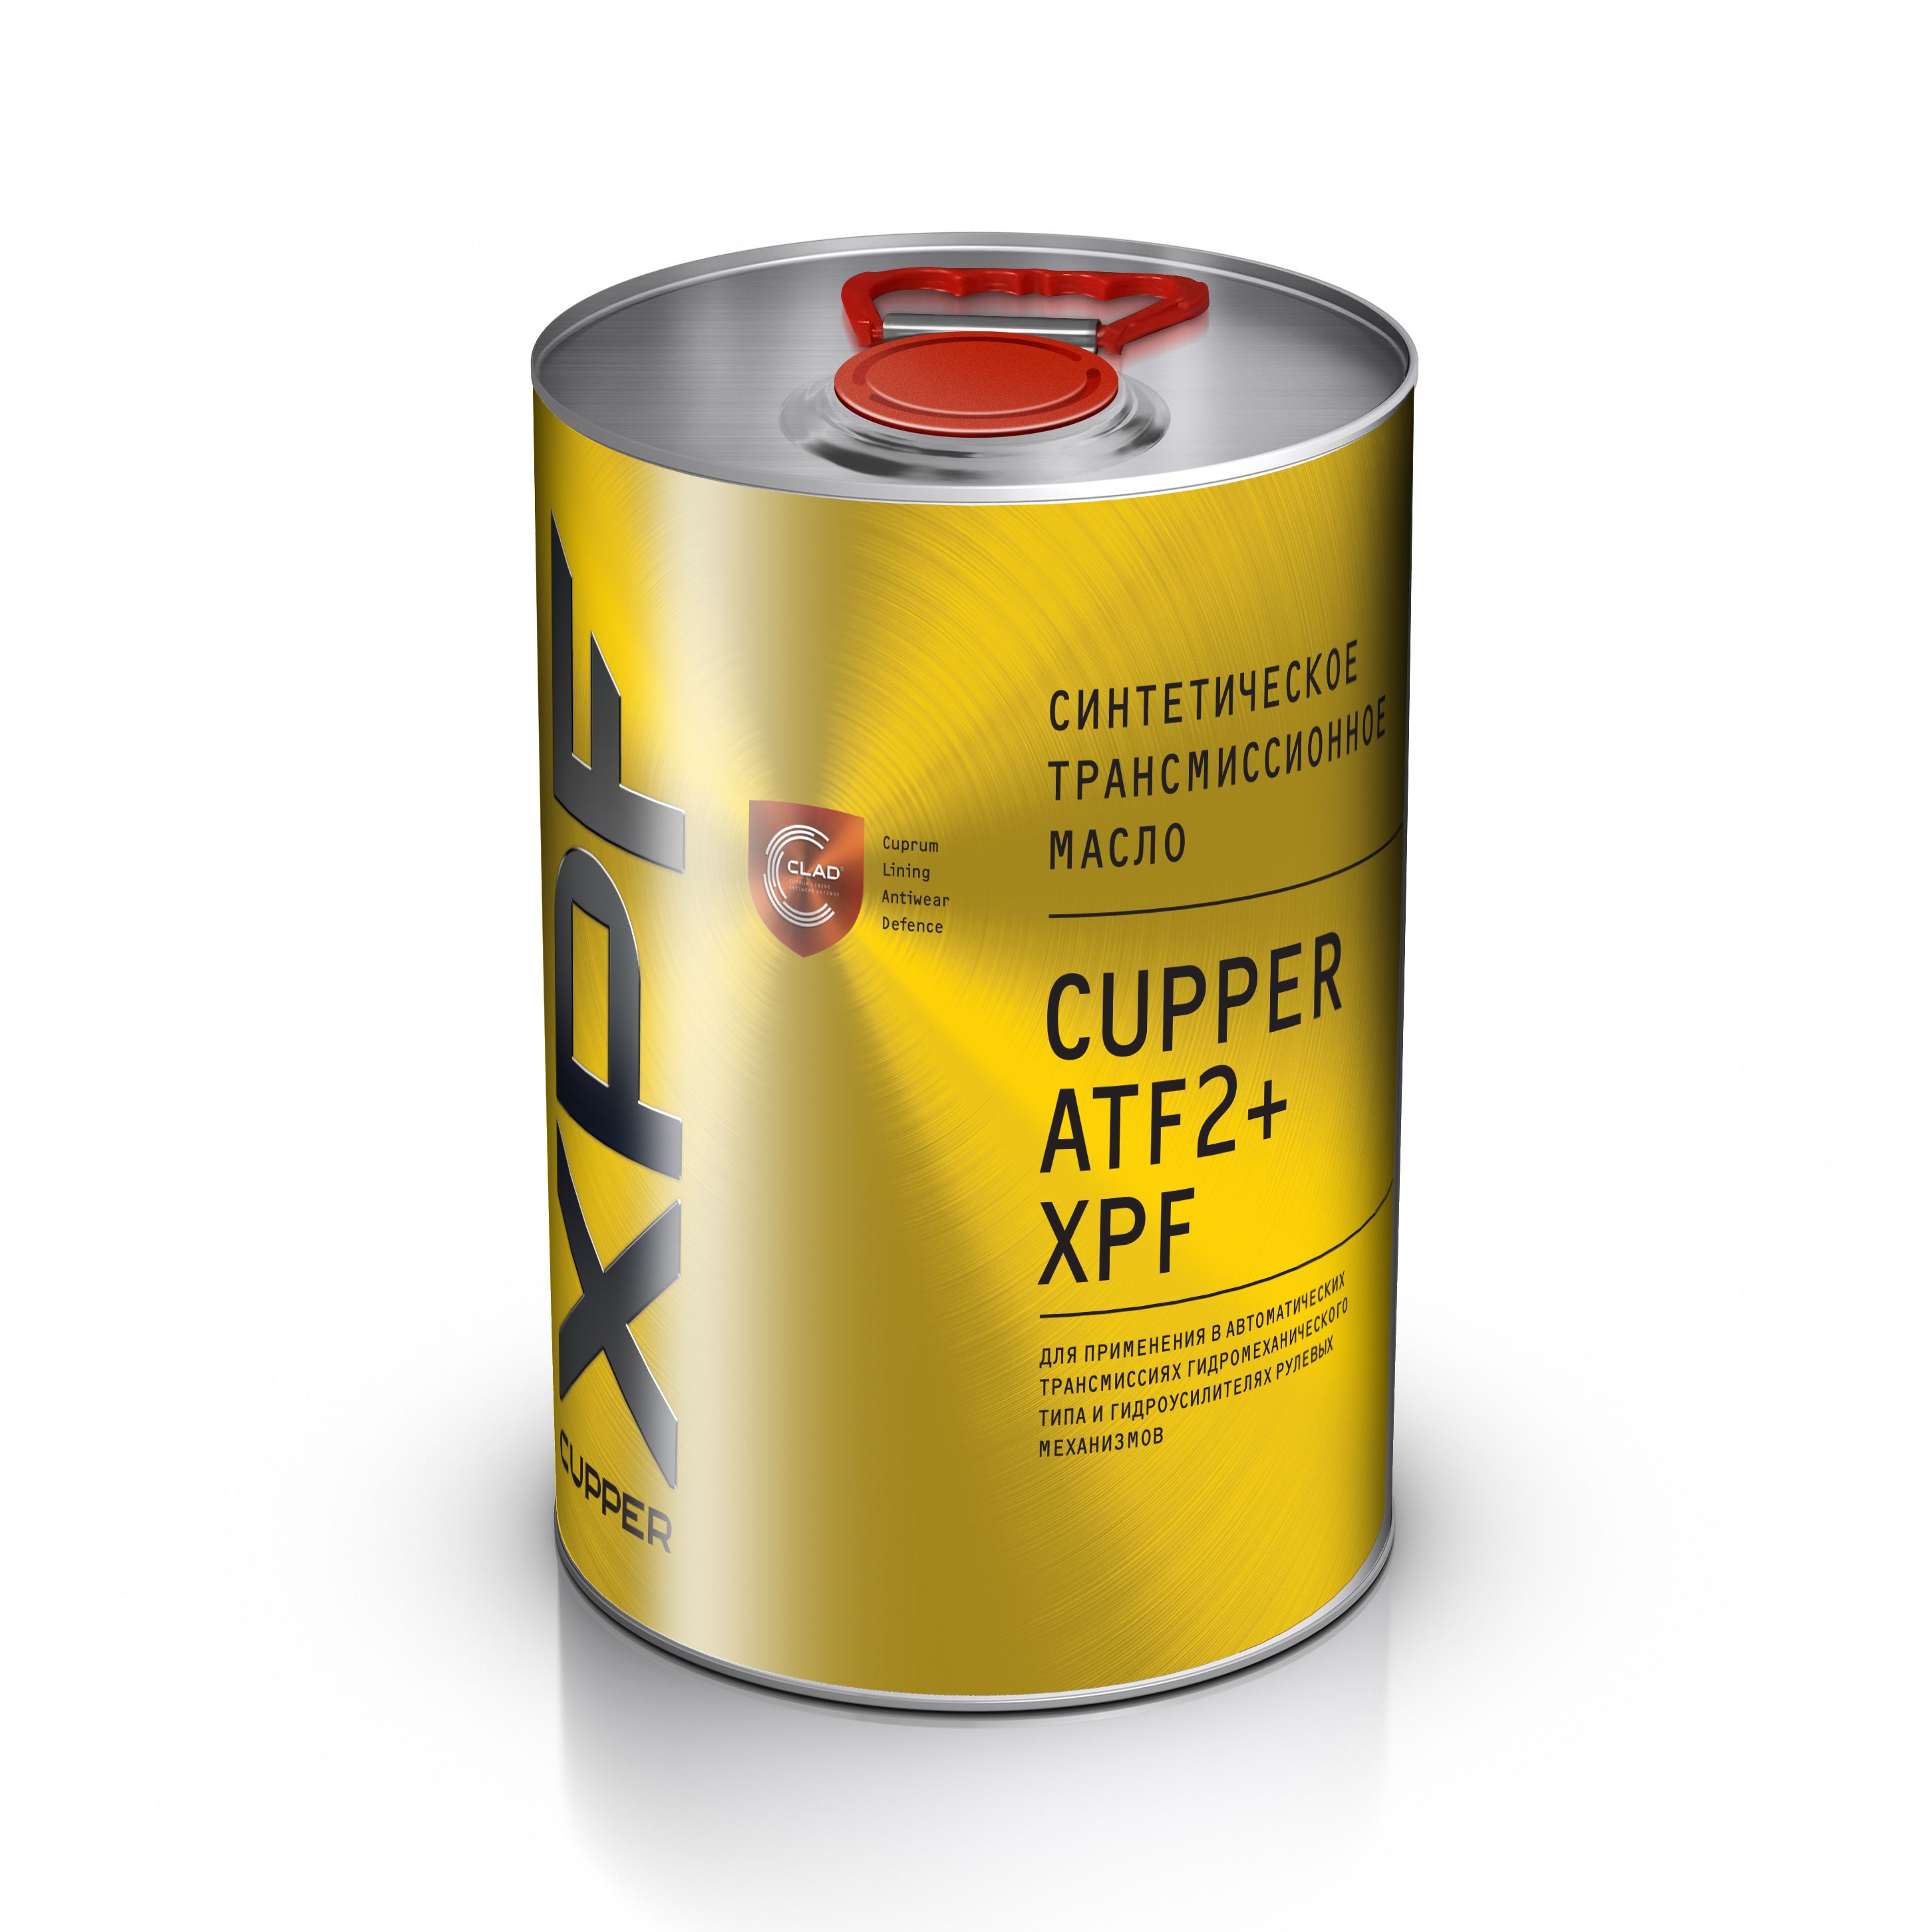 Atf 6 трансмиссионное масло. Cupper масло трансмиссионное. Cupper atf2+ XPF артикул. Cupper 75w90. Масло трансмиссия синтетика.